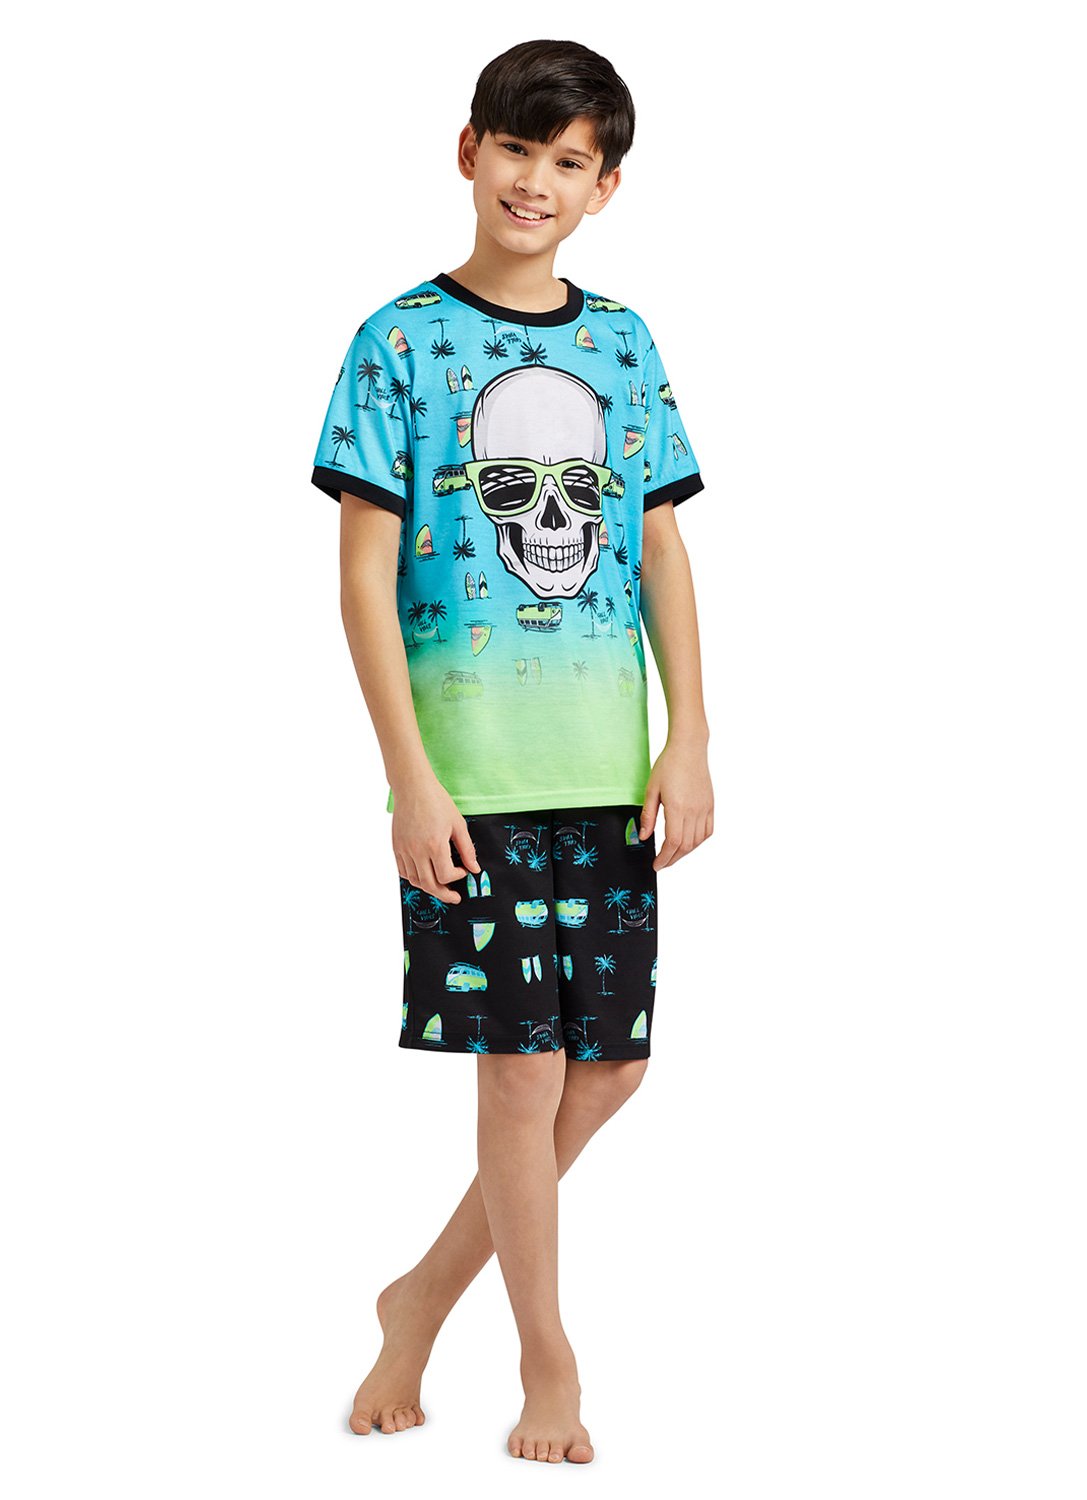 Boy with Skull Print Top & Beach Shorts